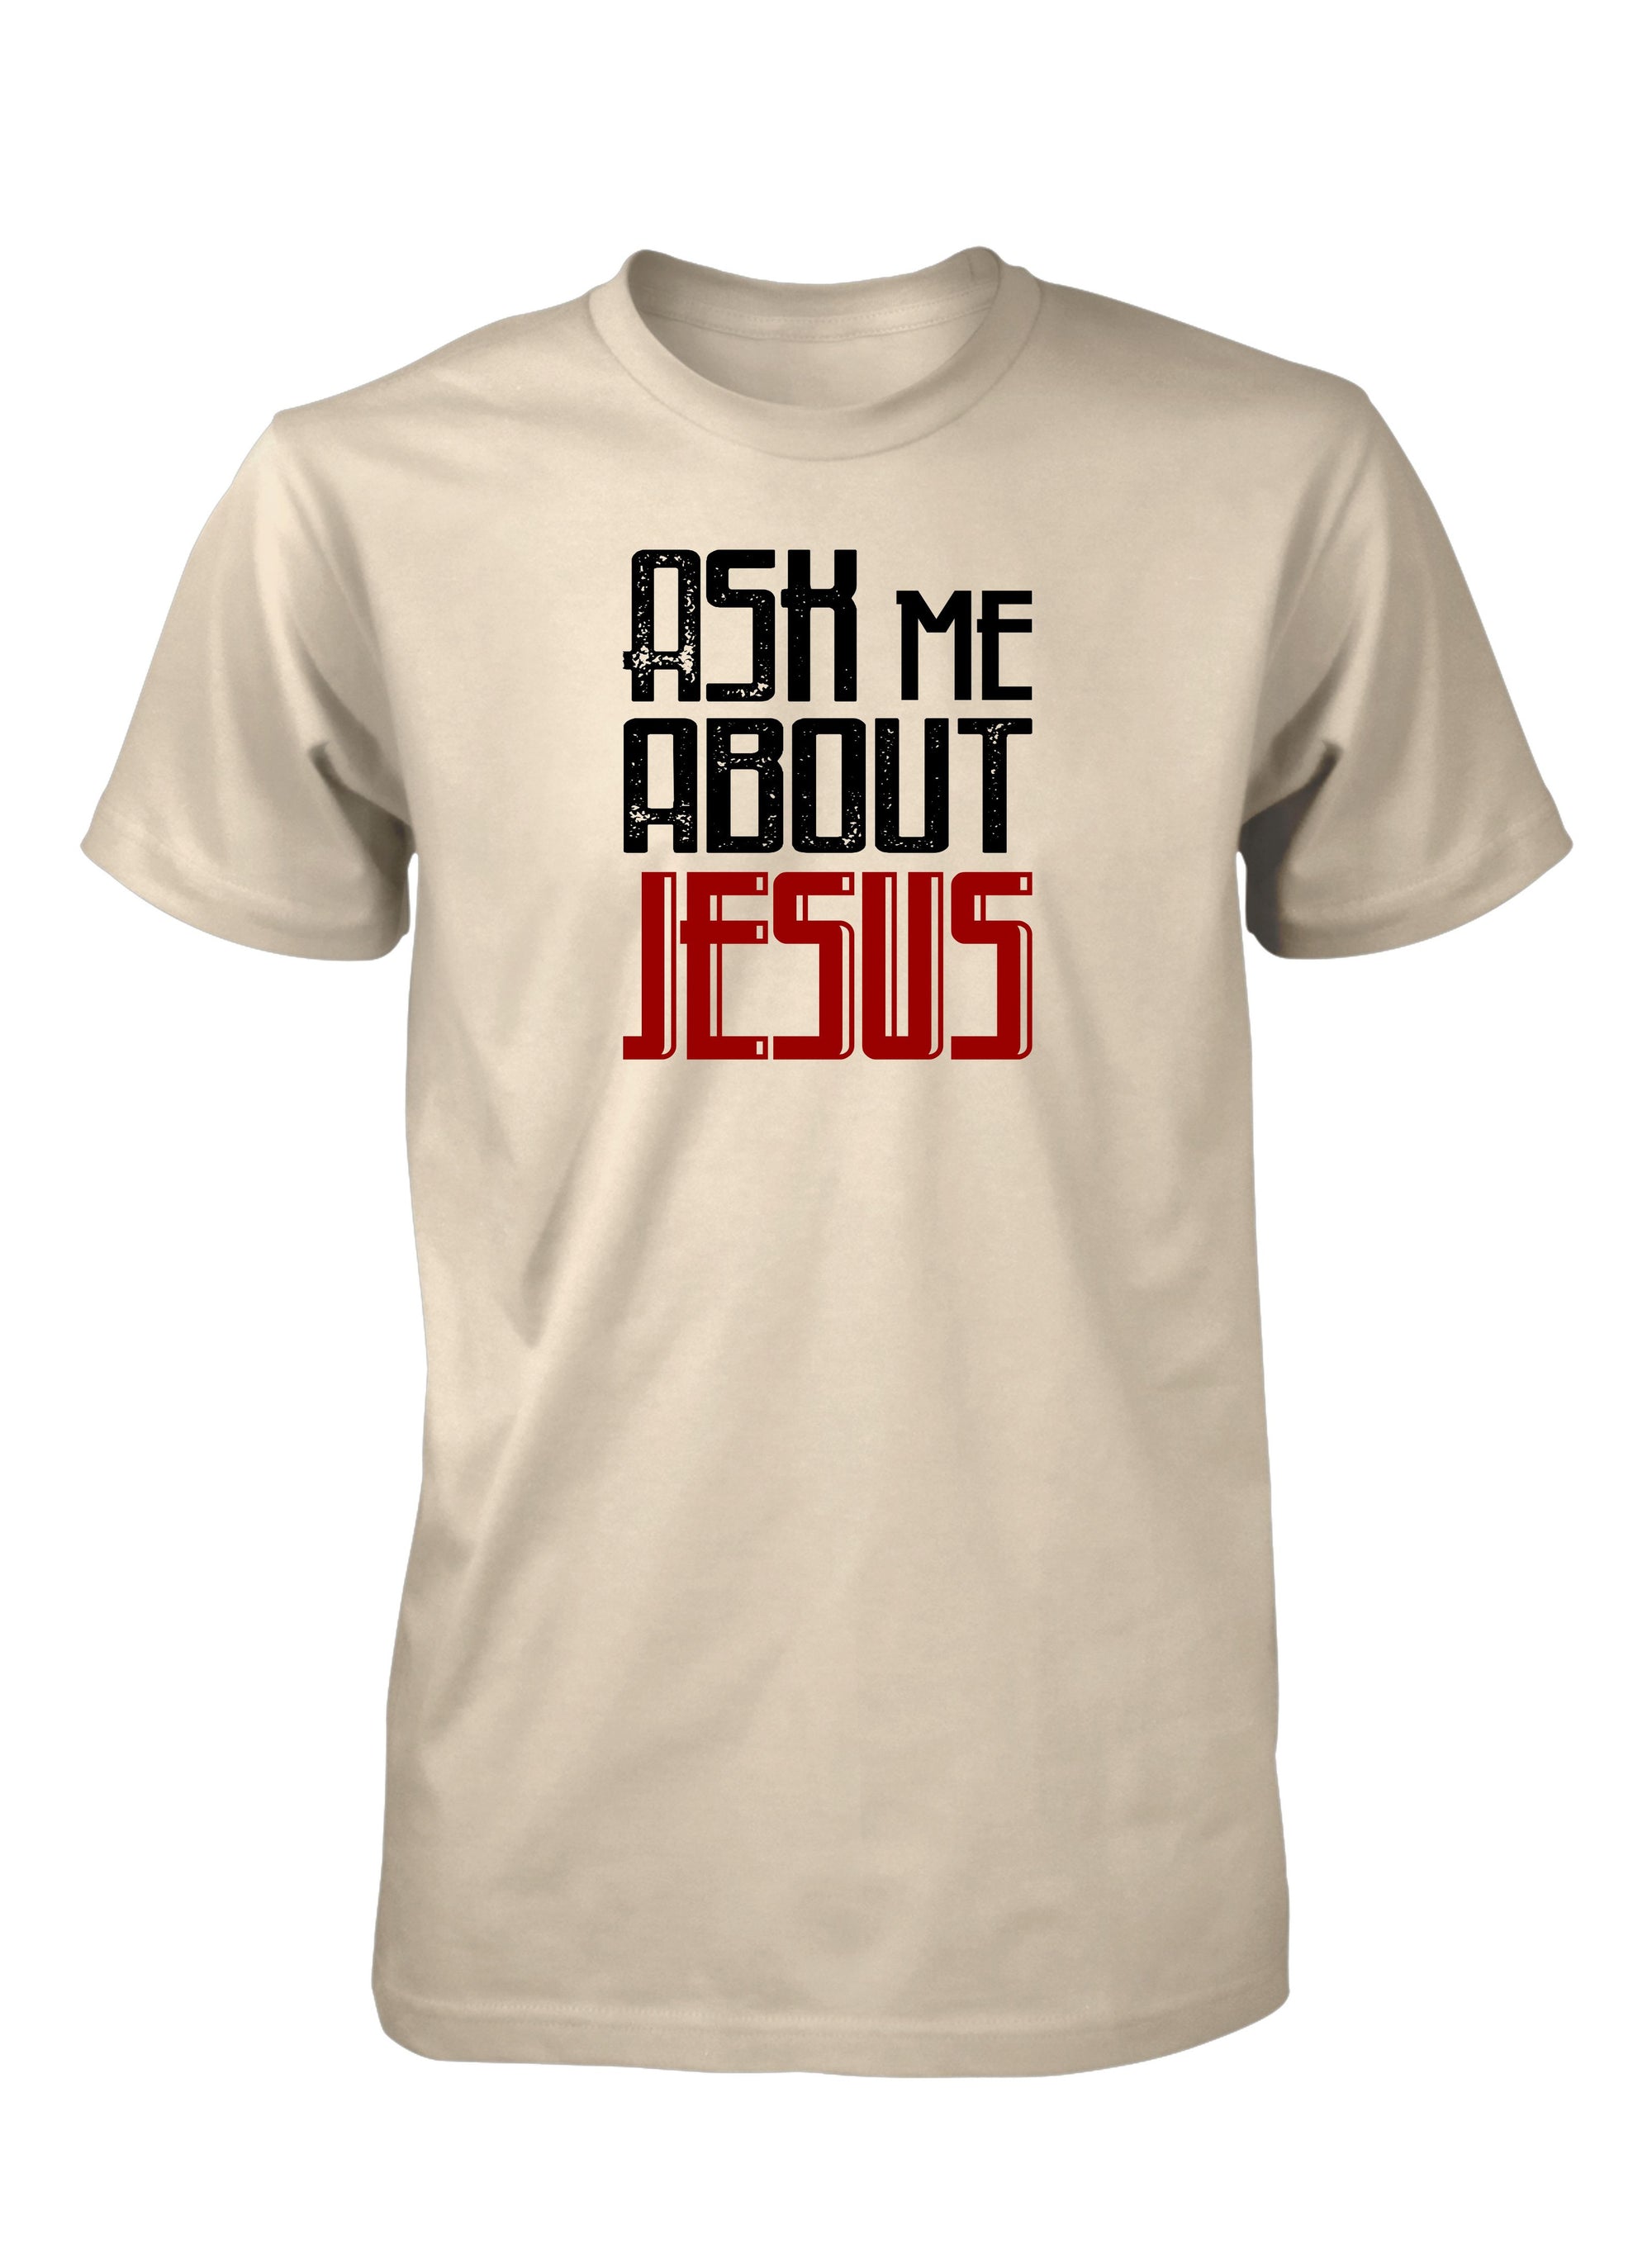 Ask Me About Jesus Preach Gospel Christian T-shirt for Men